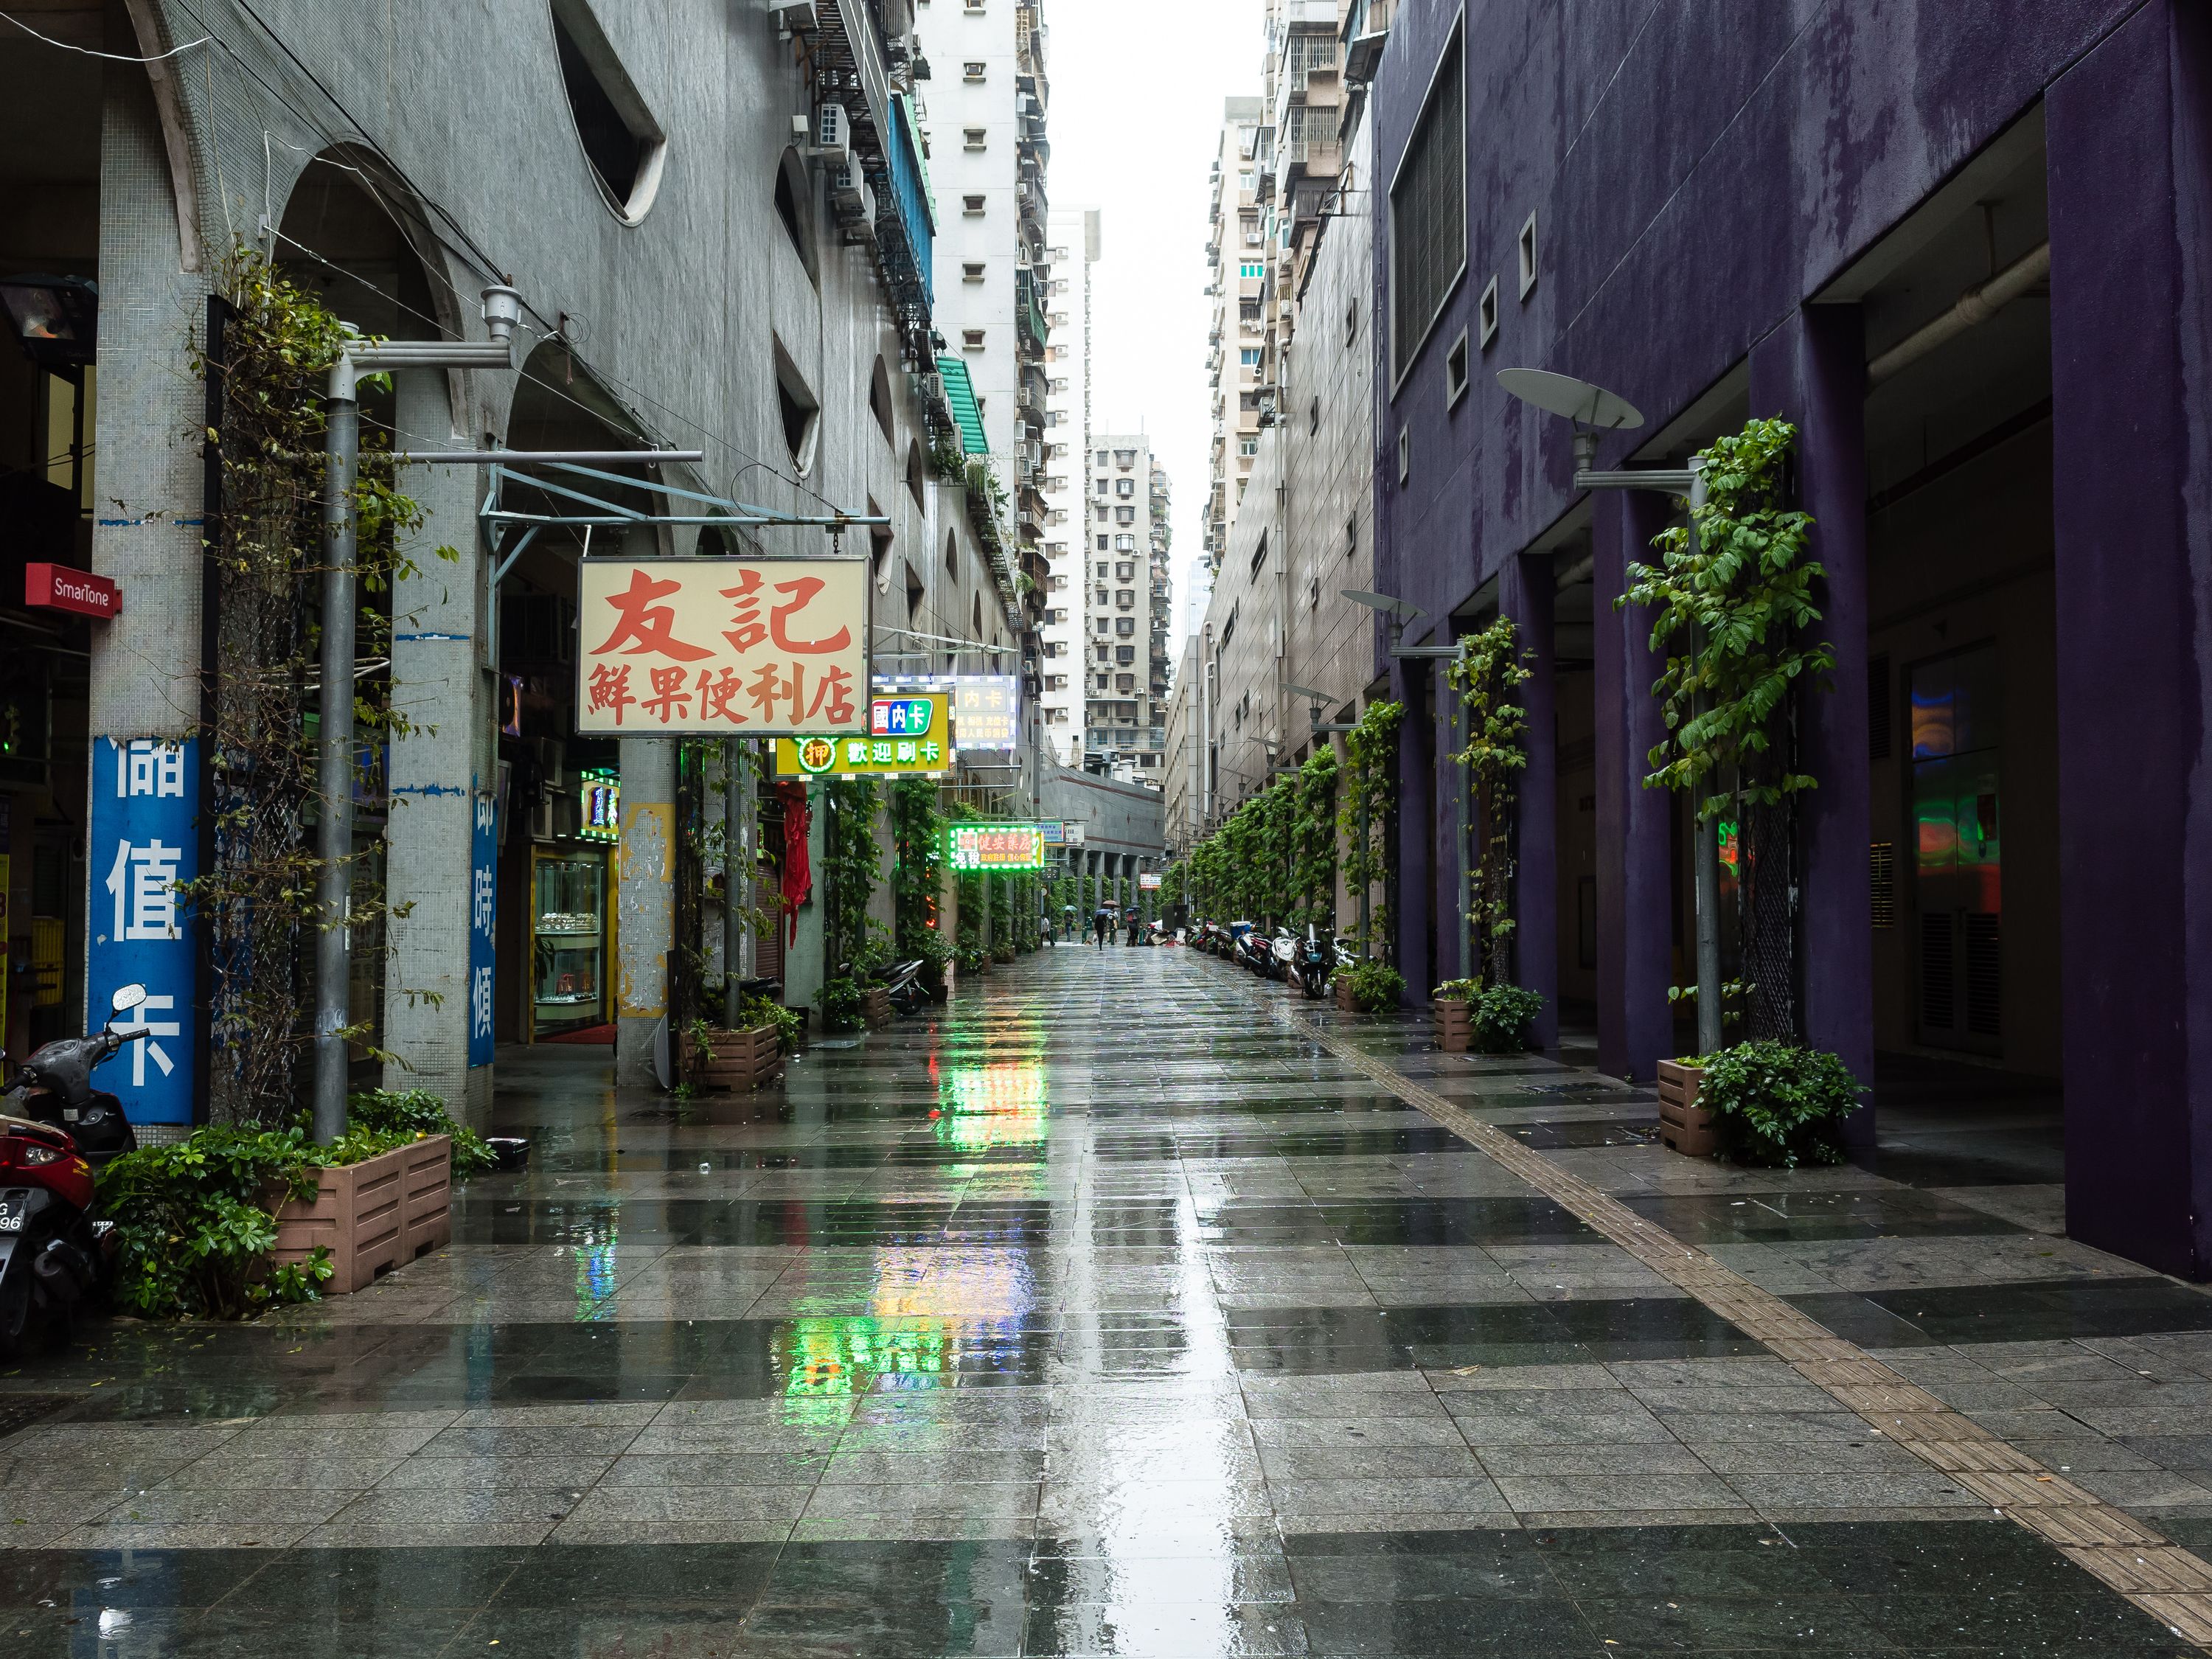 rainy-alleyway-in-macau-china